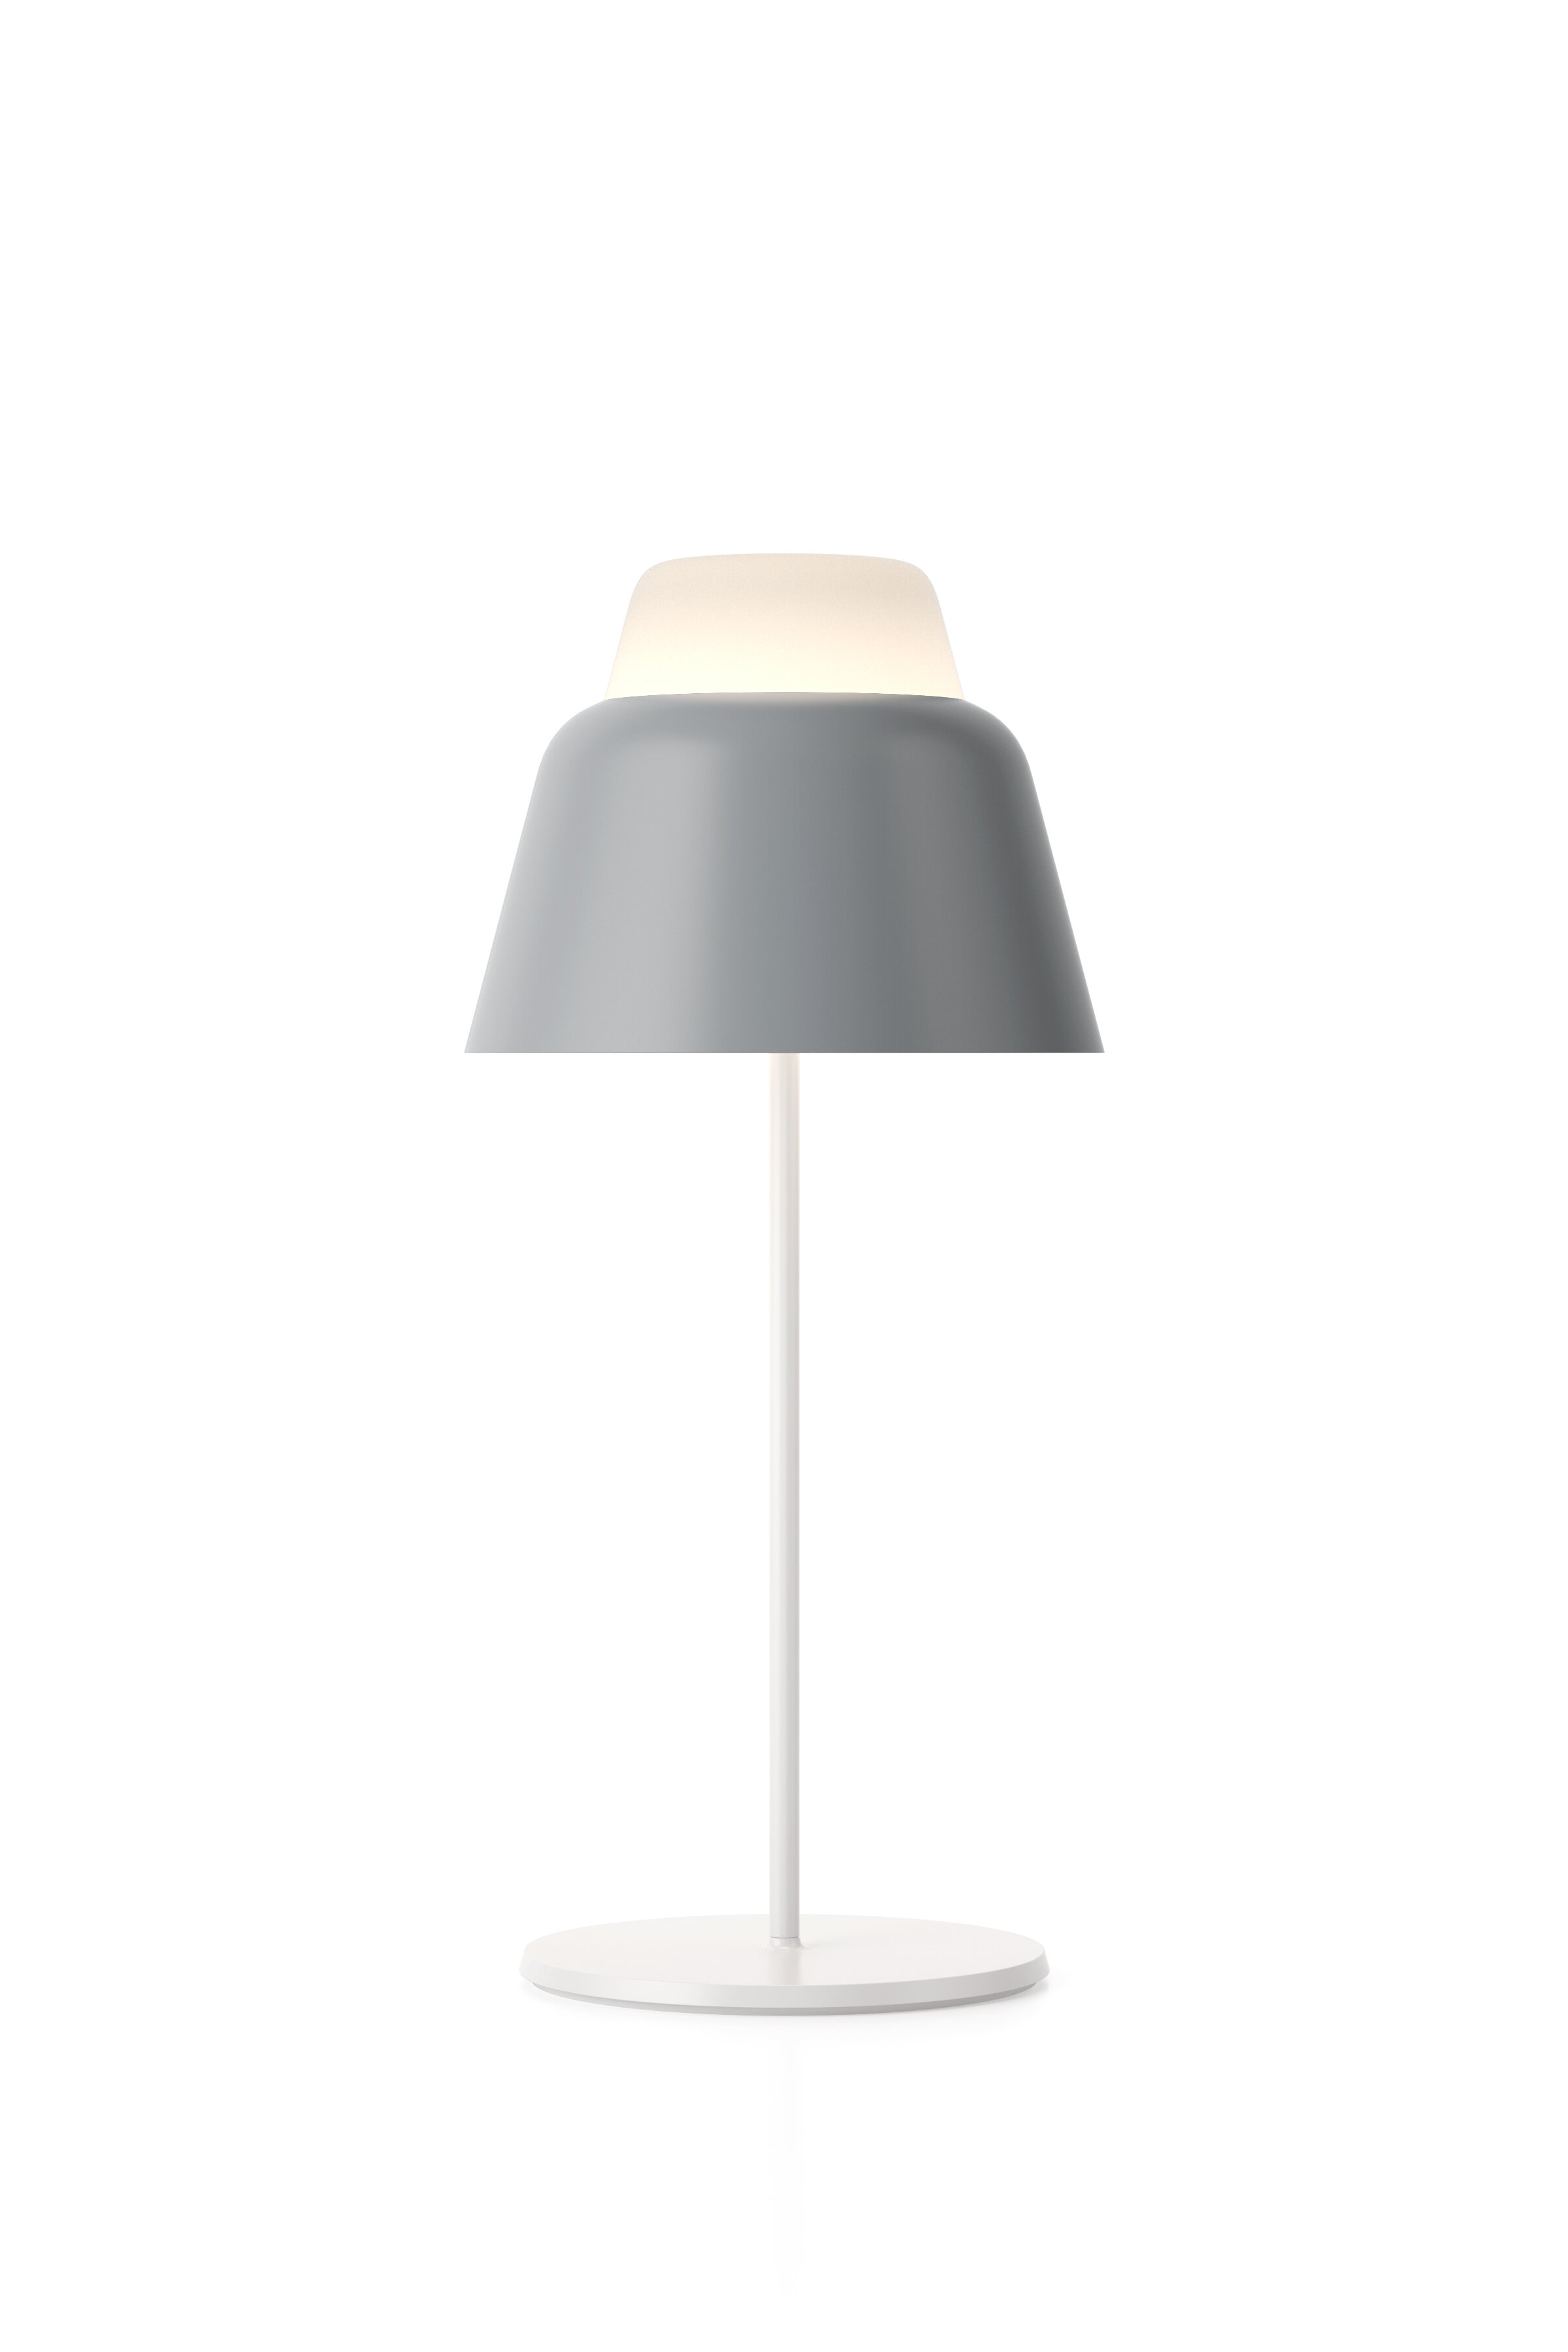 teo-modu-table-lamp-matte-gray-on-cutout.jpg